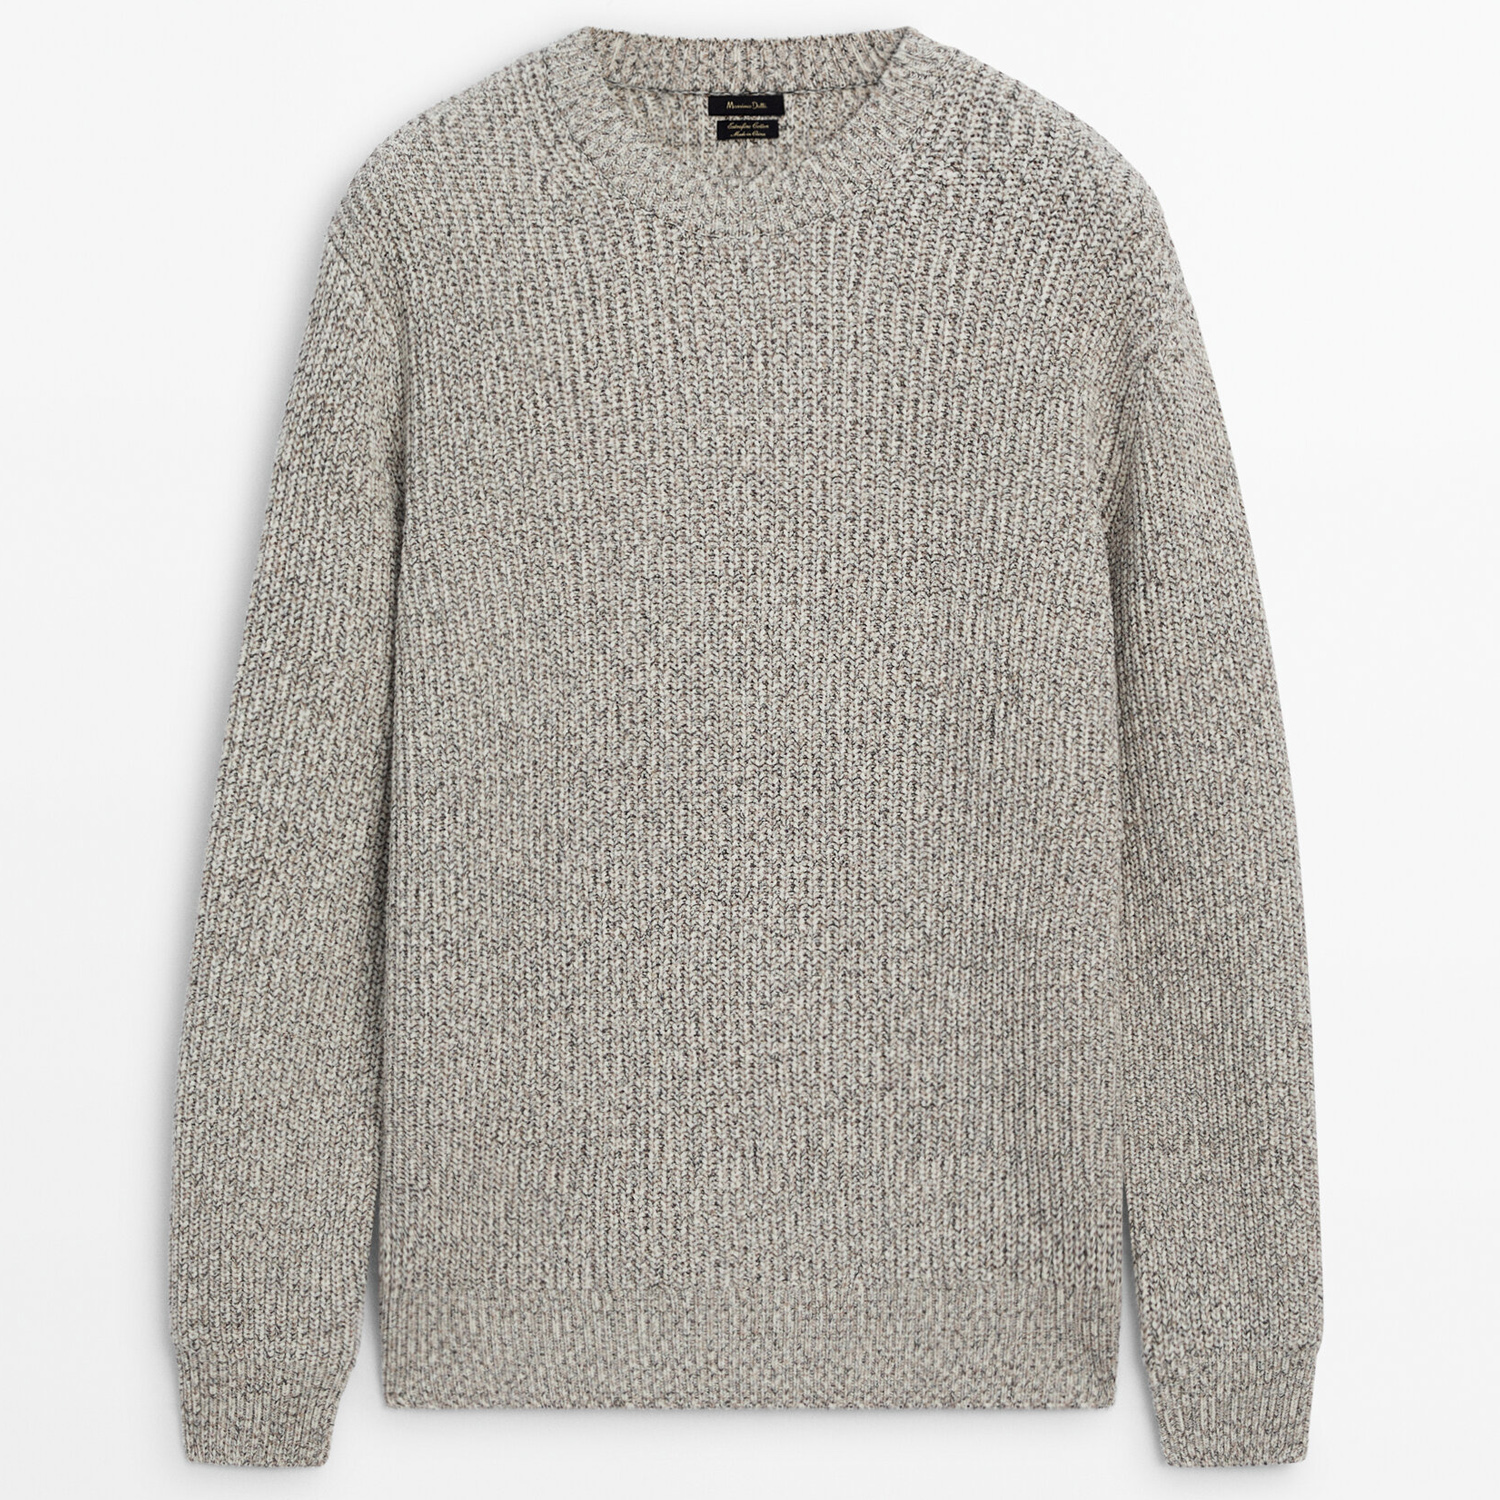 Свитер Massimo Dutti Cotton Blend Knit, кремовый свитер massimo dutti wide placket кремовый